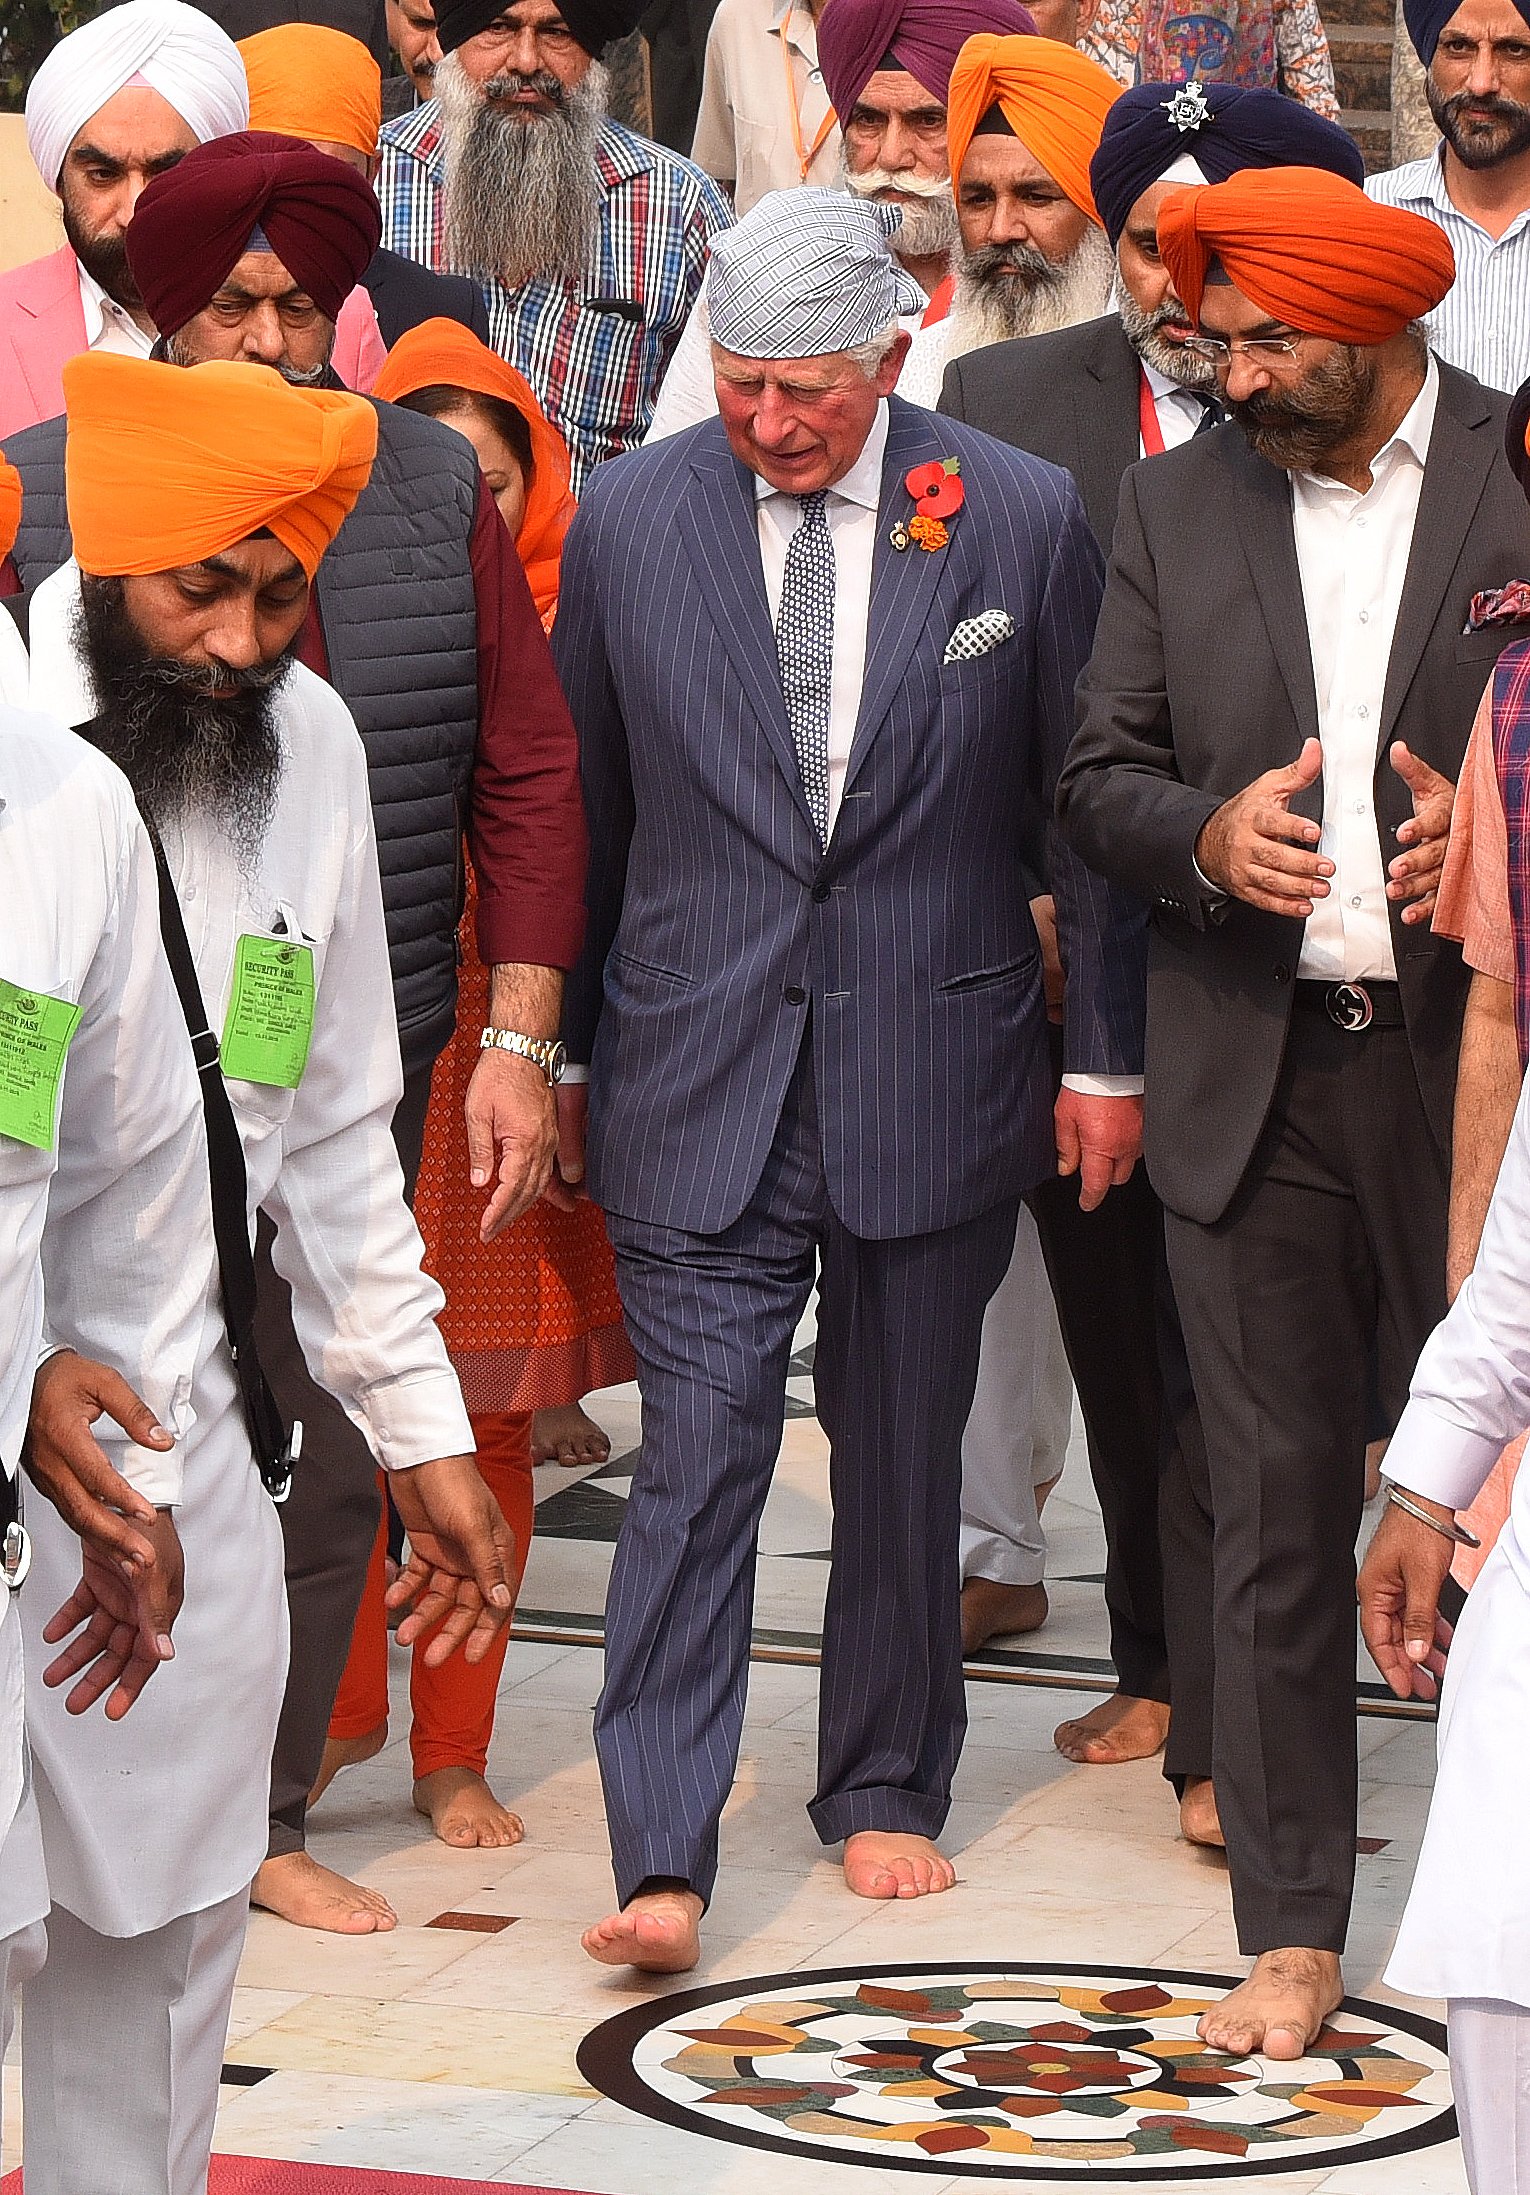 Prince Charles during his visit at Gurudwara Bangla Sahib to celebrate the 550th birth anniversary of Guru Nanak on November 13, 2019 in New Delhi, India | Source: Getty Images